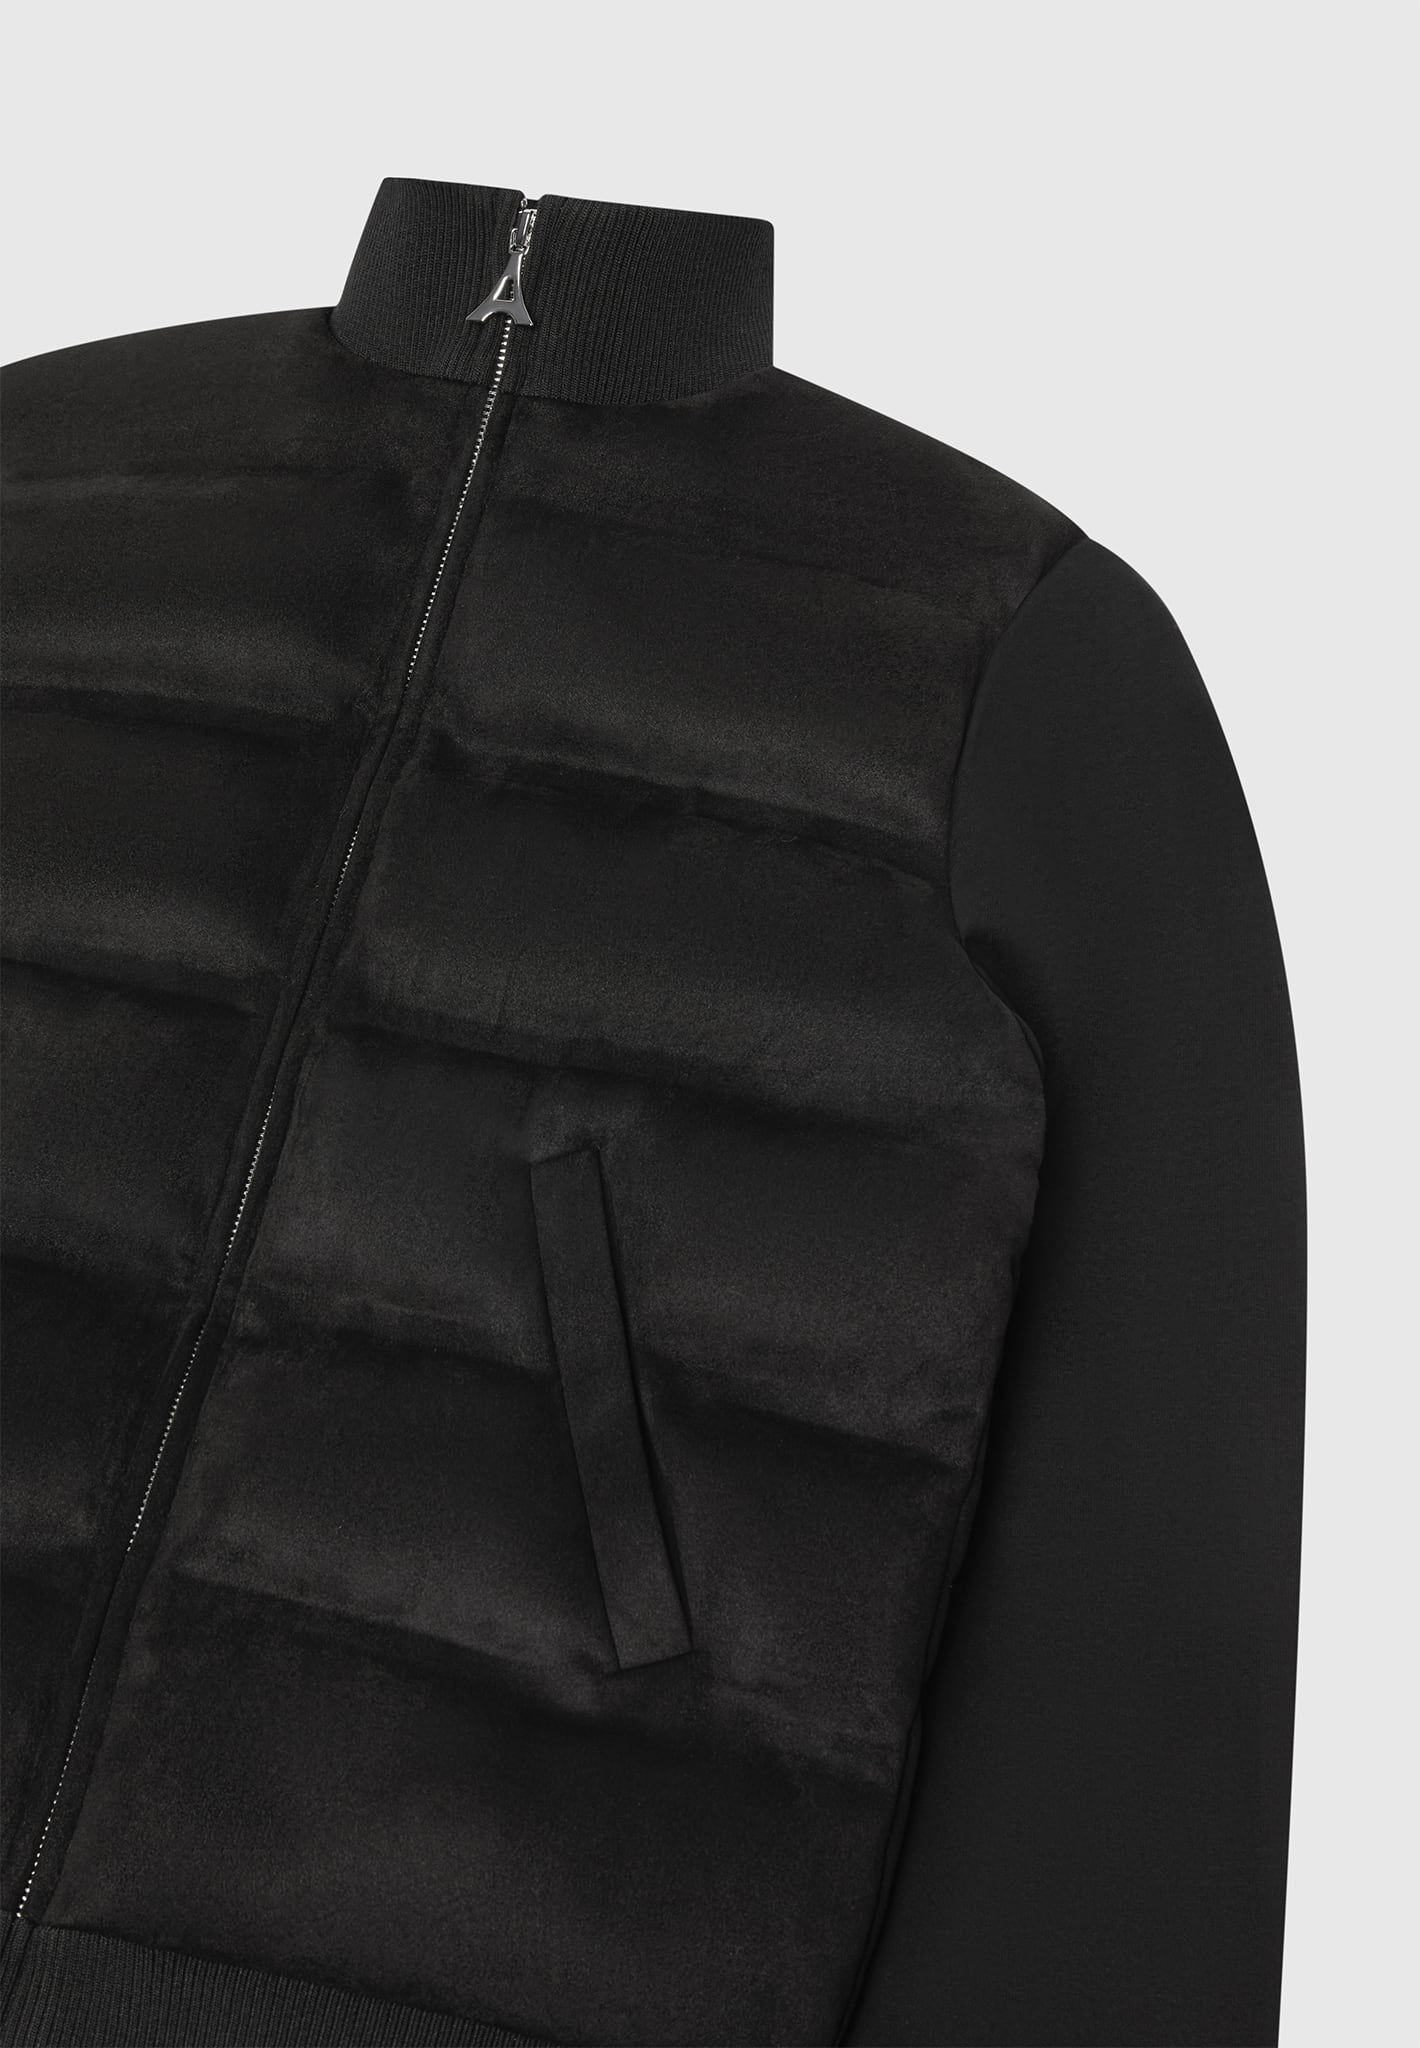 suede-jersey-heat-seal-jacket-black